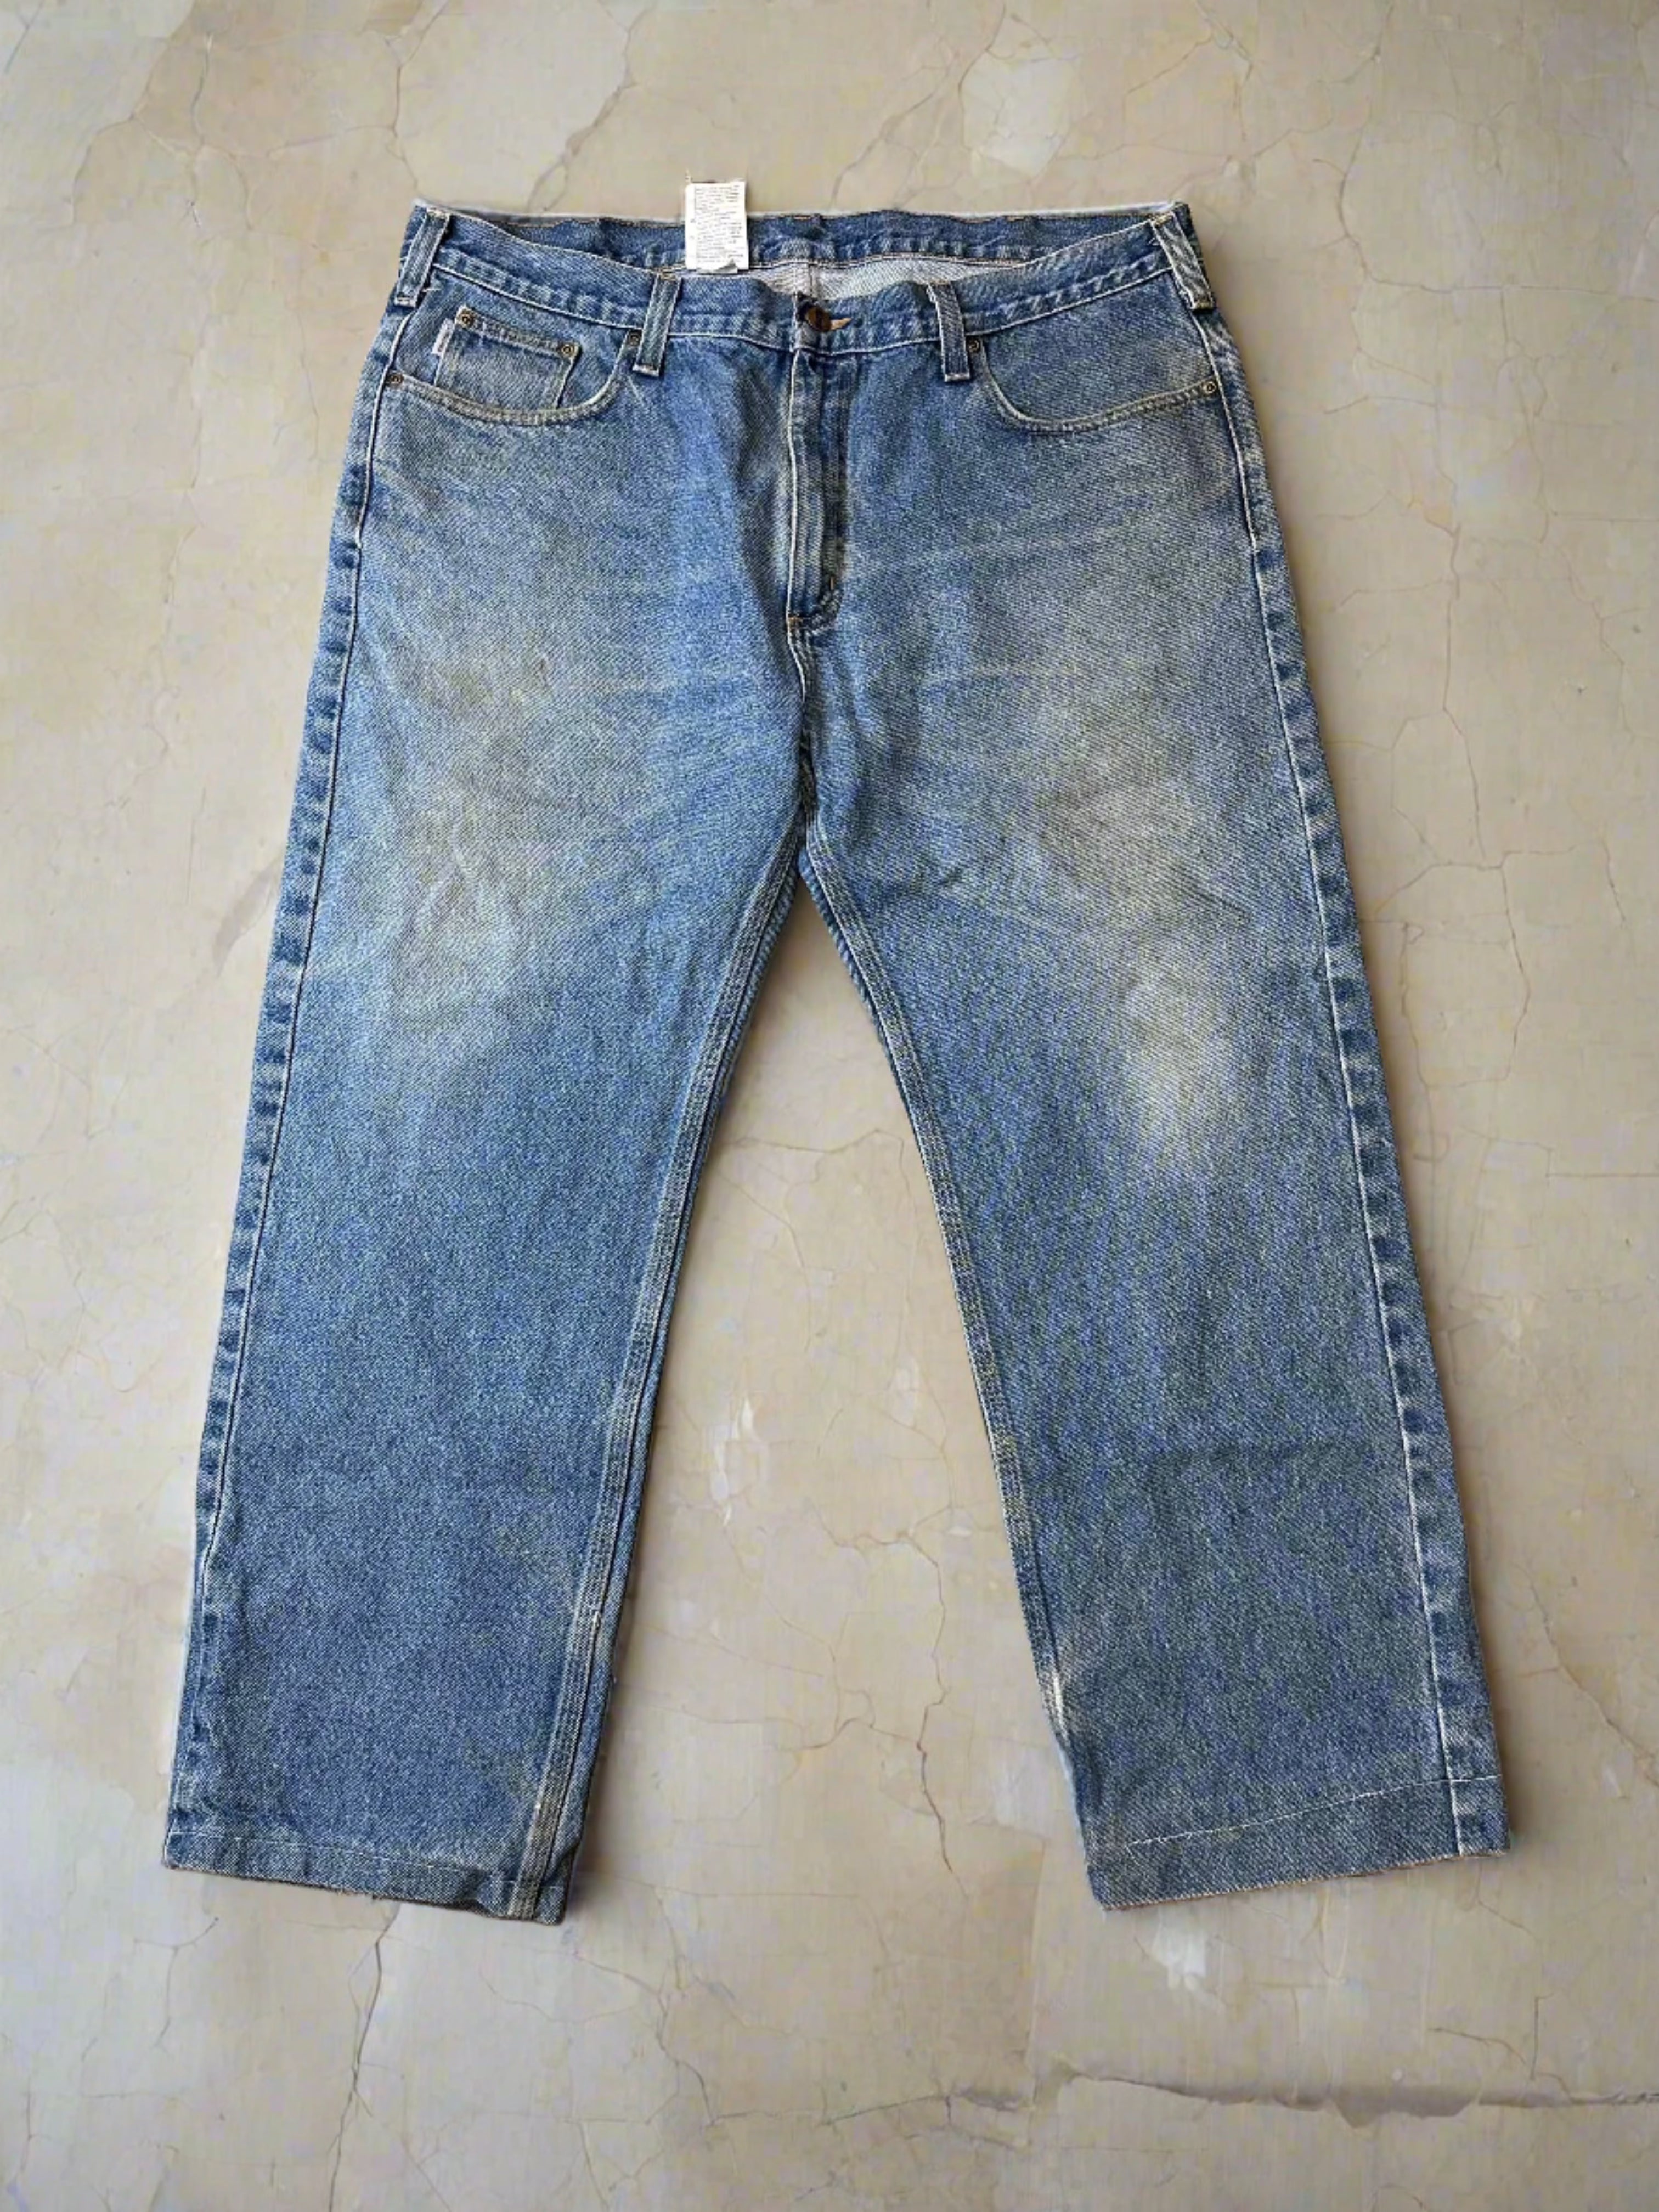 Vintage Carhartt Denim Pants - size 40x30